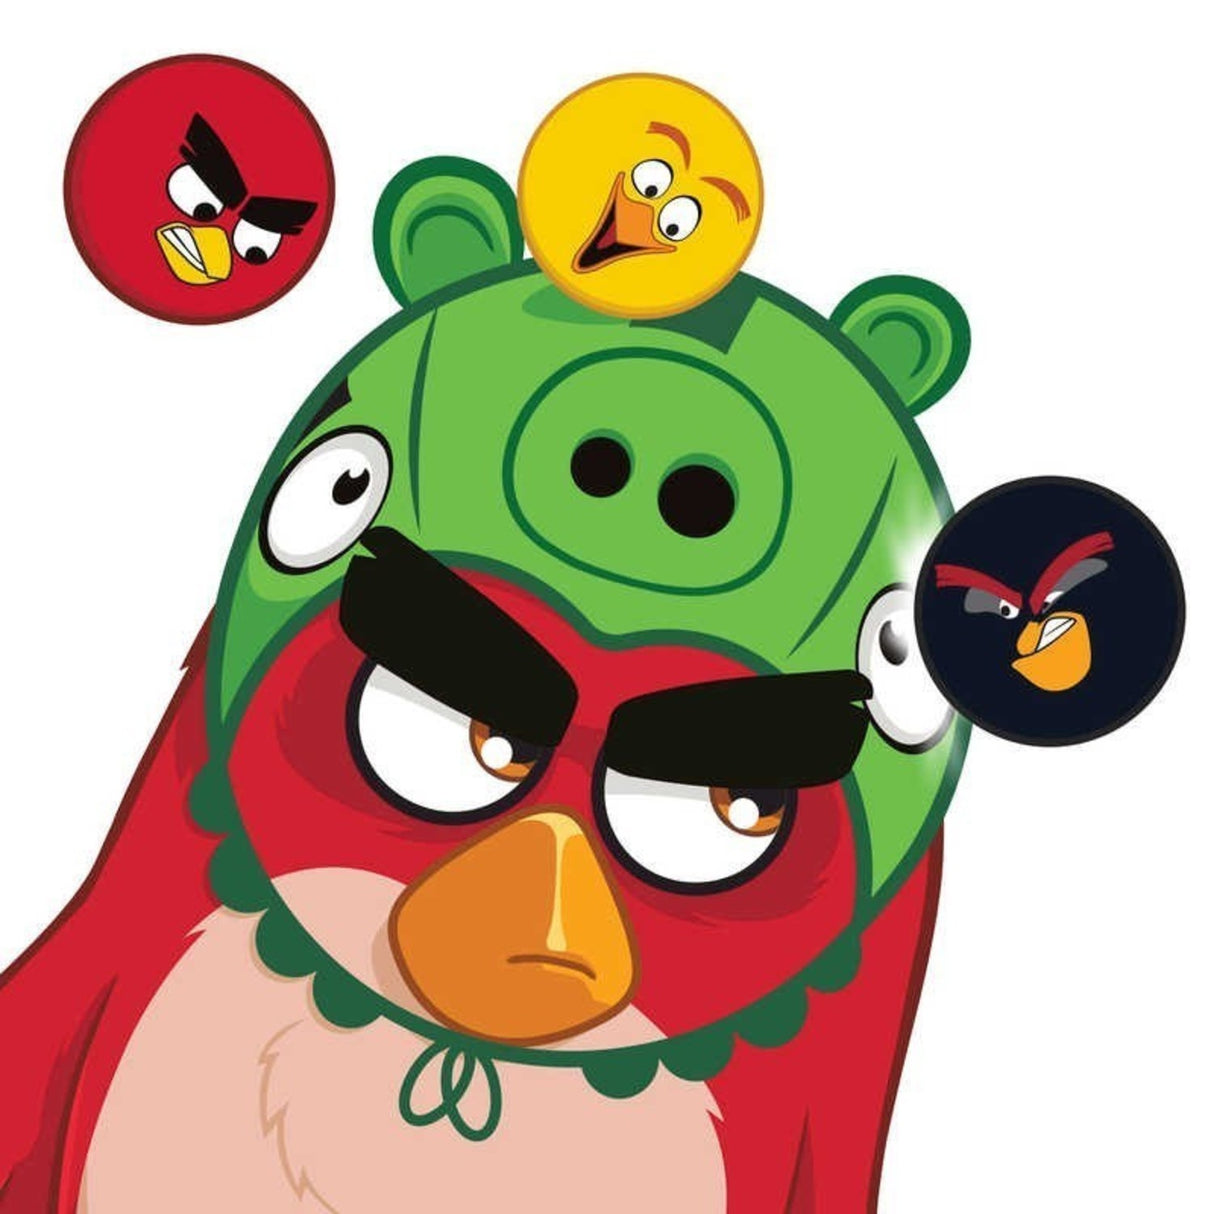 Angry Birds Fanghut Spielzeug